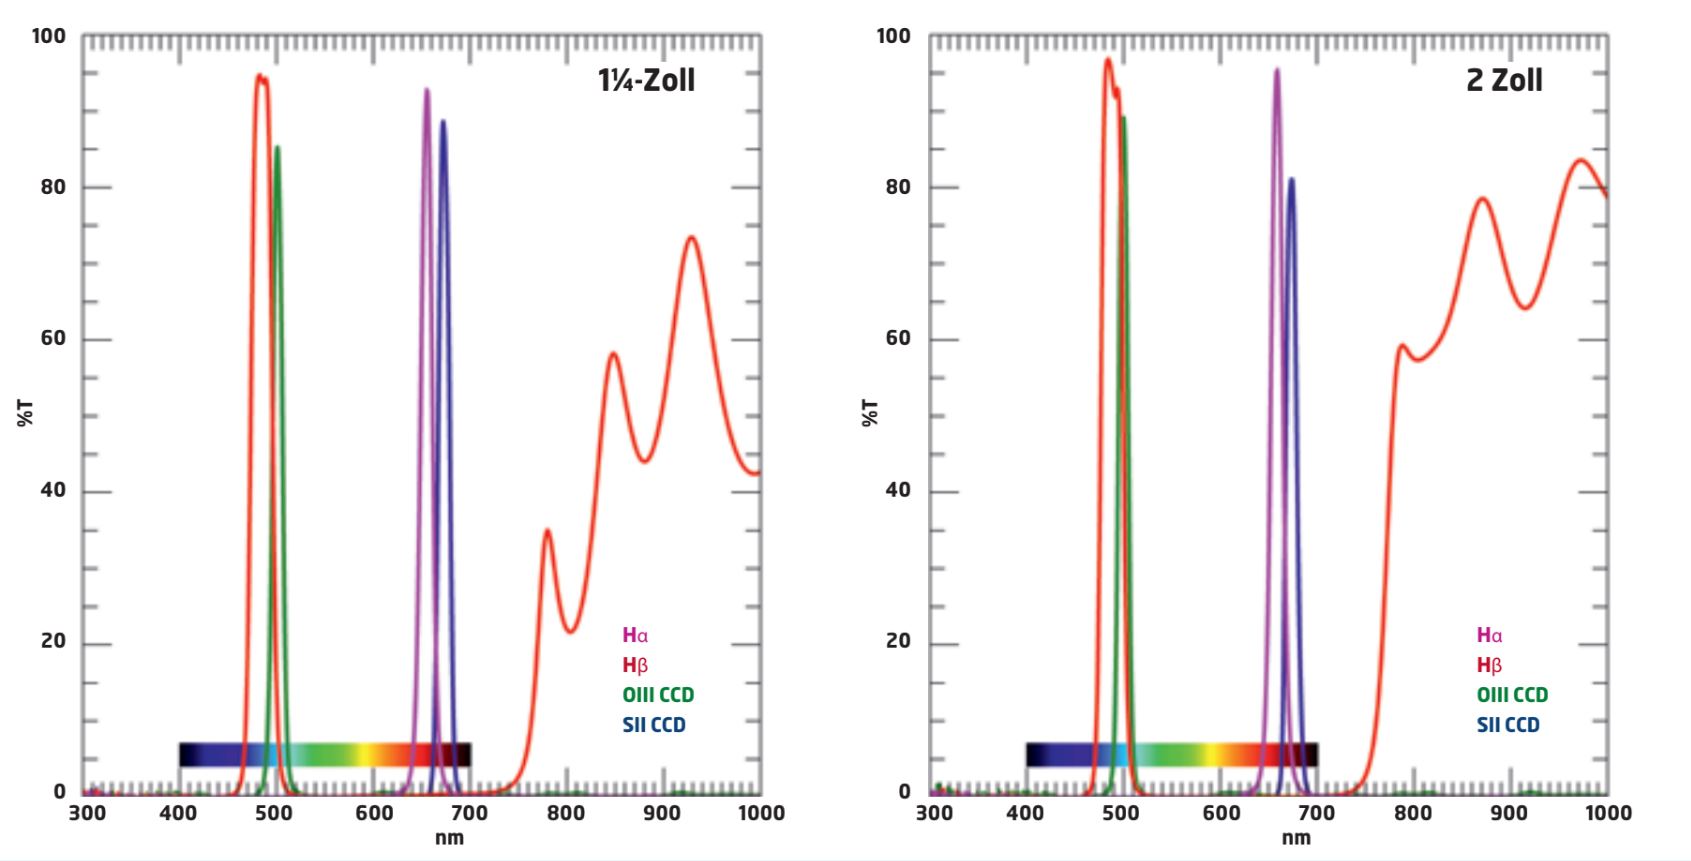 Diagramele de transmisie ale filtrelor Hα, Hβ, OIII CCD și SII CCD